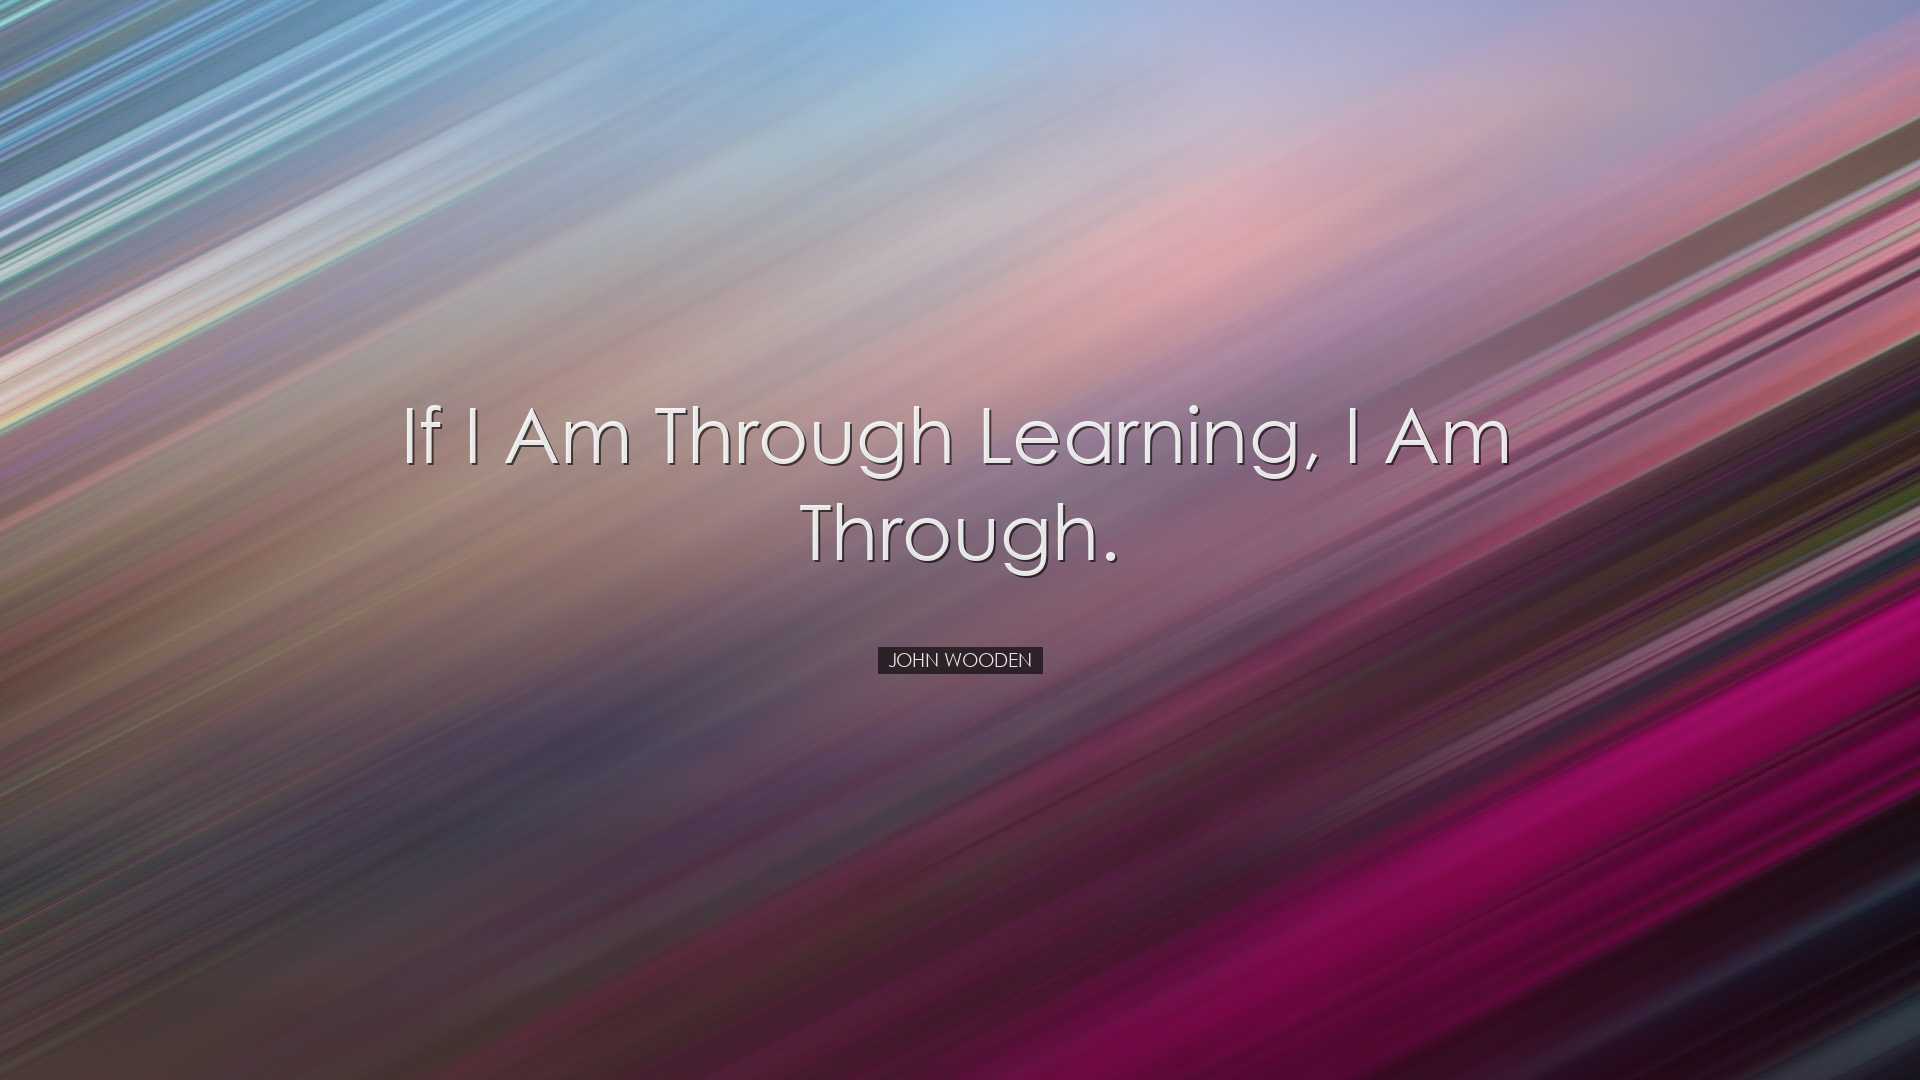 If I am through learning, I am through. - John Wooden